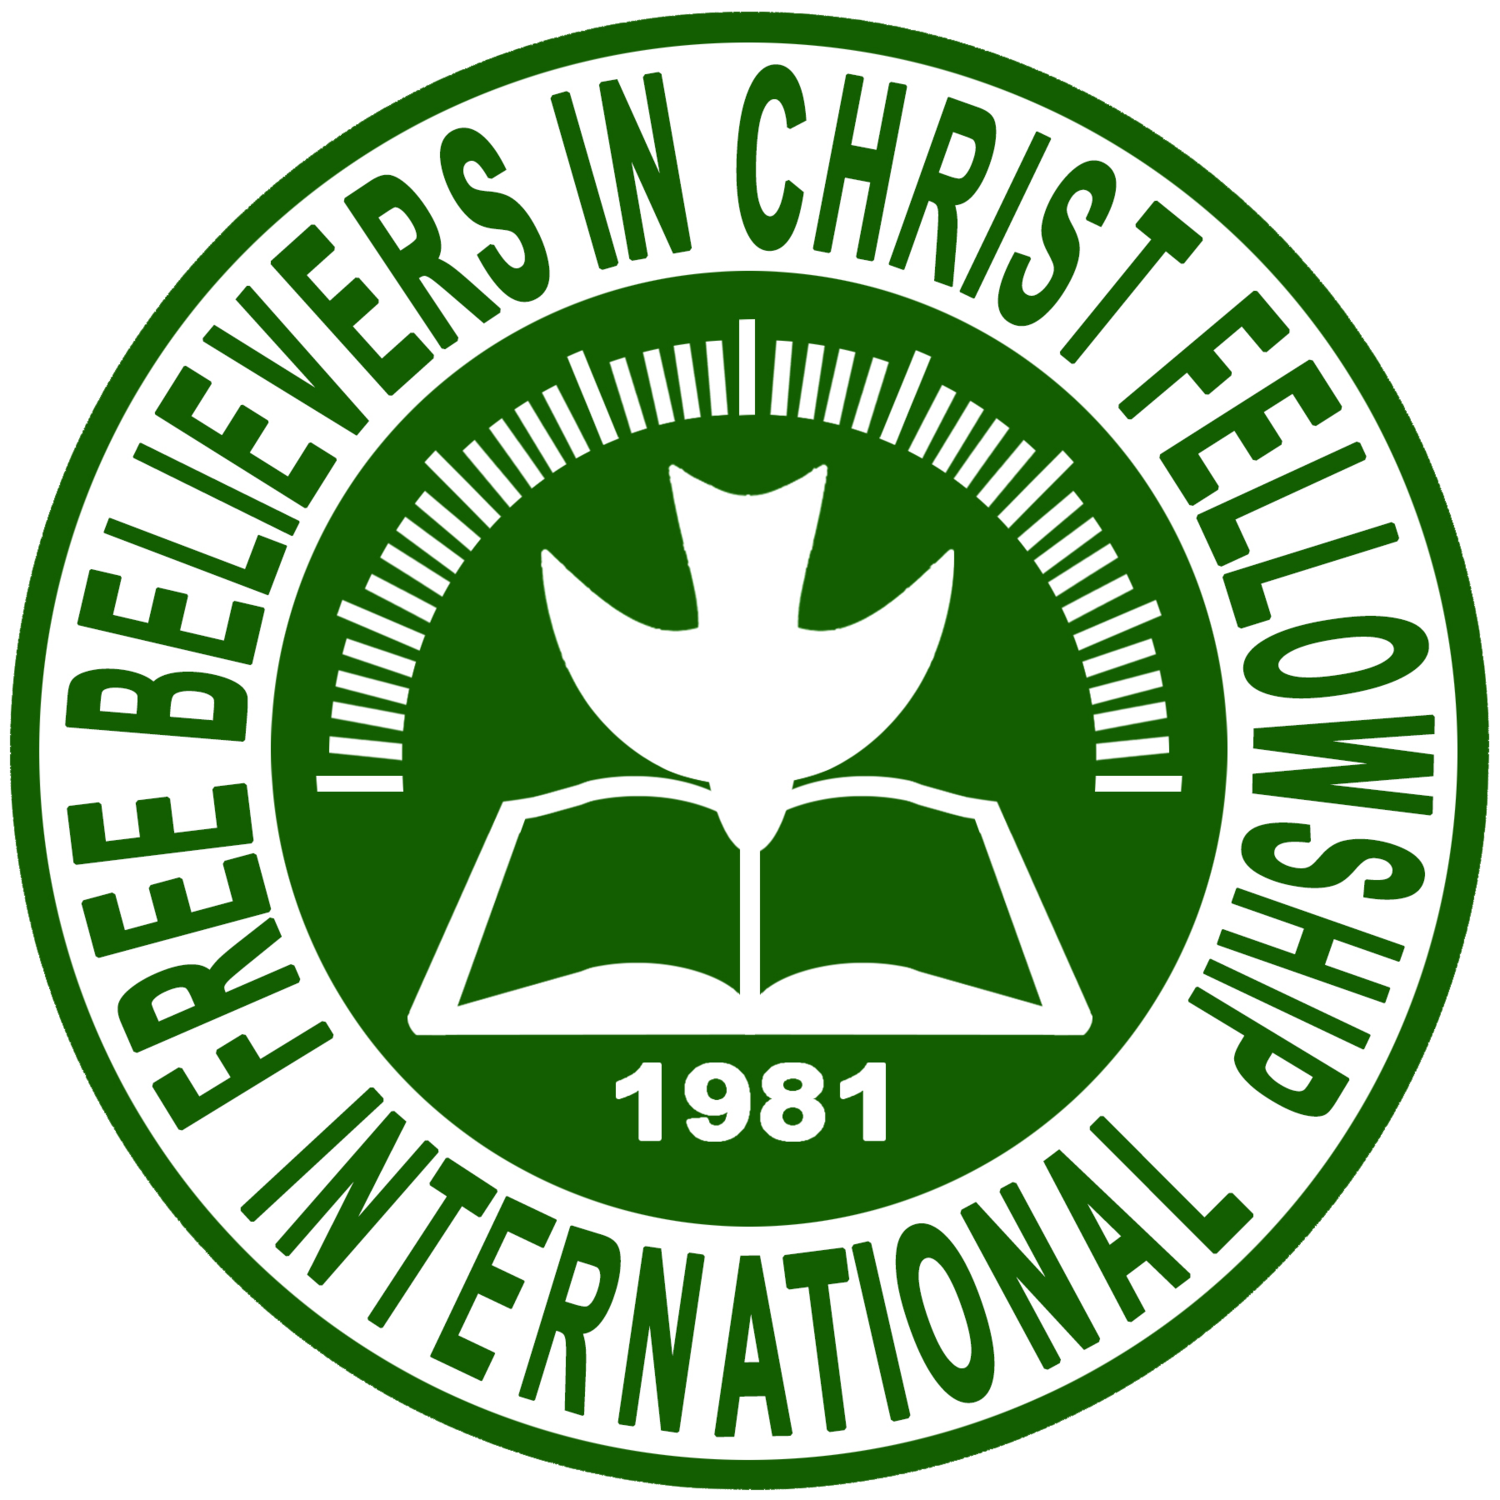 Free Believers In Christ Fellowship International